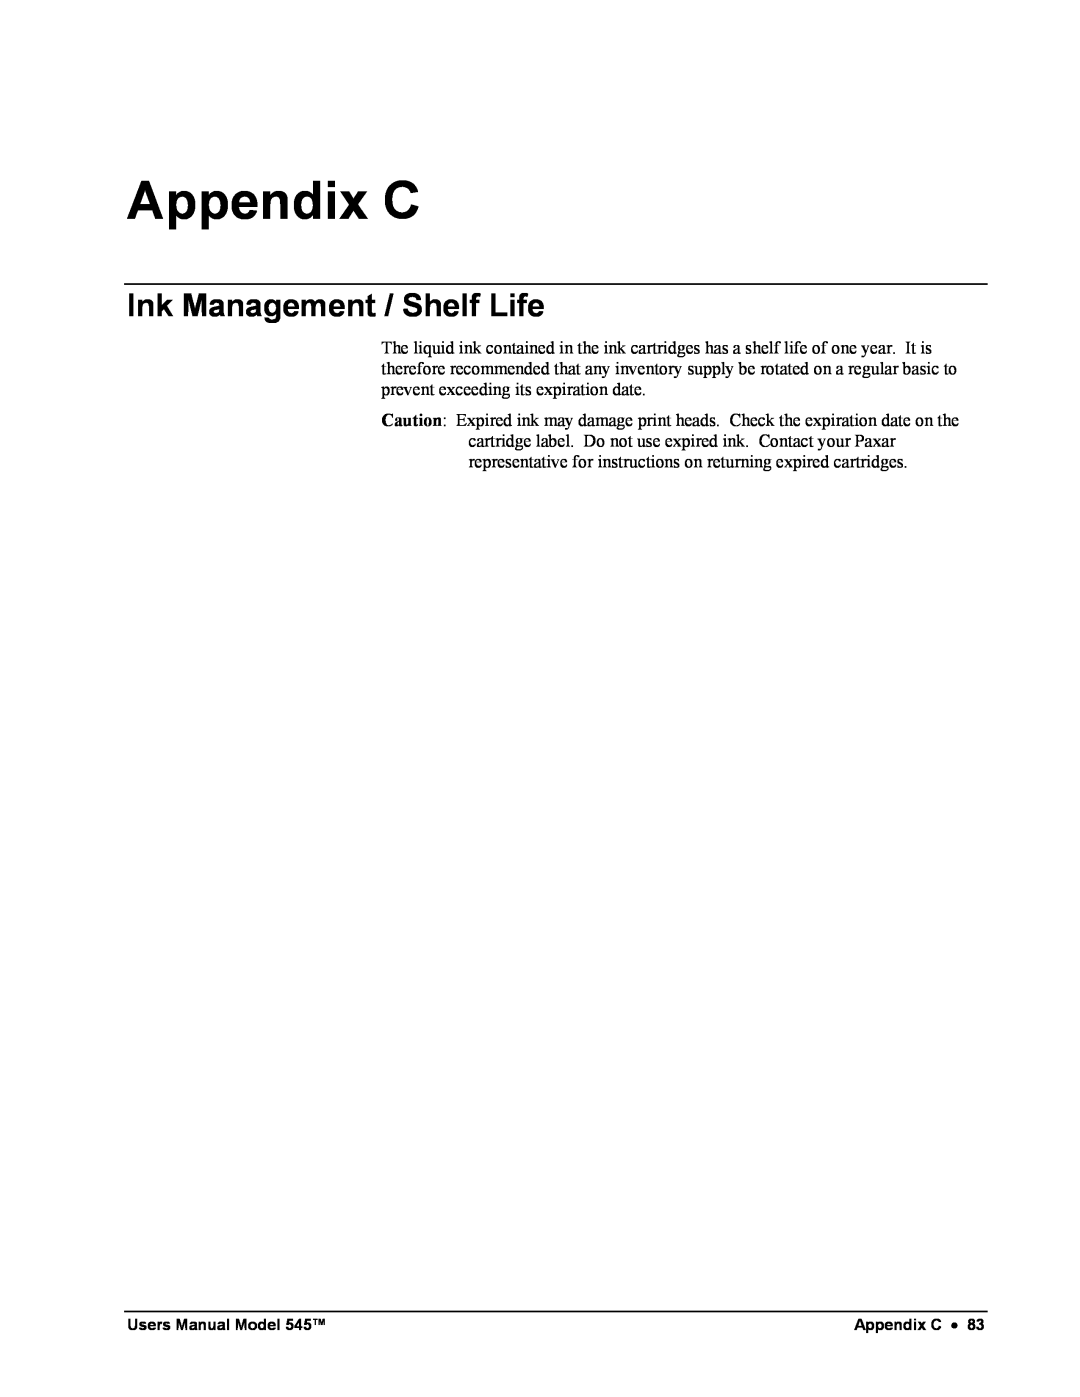 Paxar 545 user manual Appendix C, Ink Management / Shelf Life 